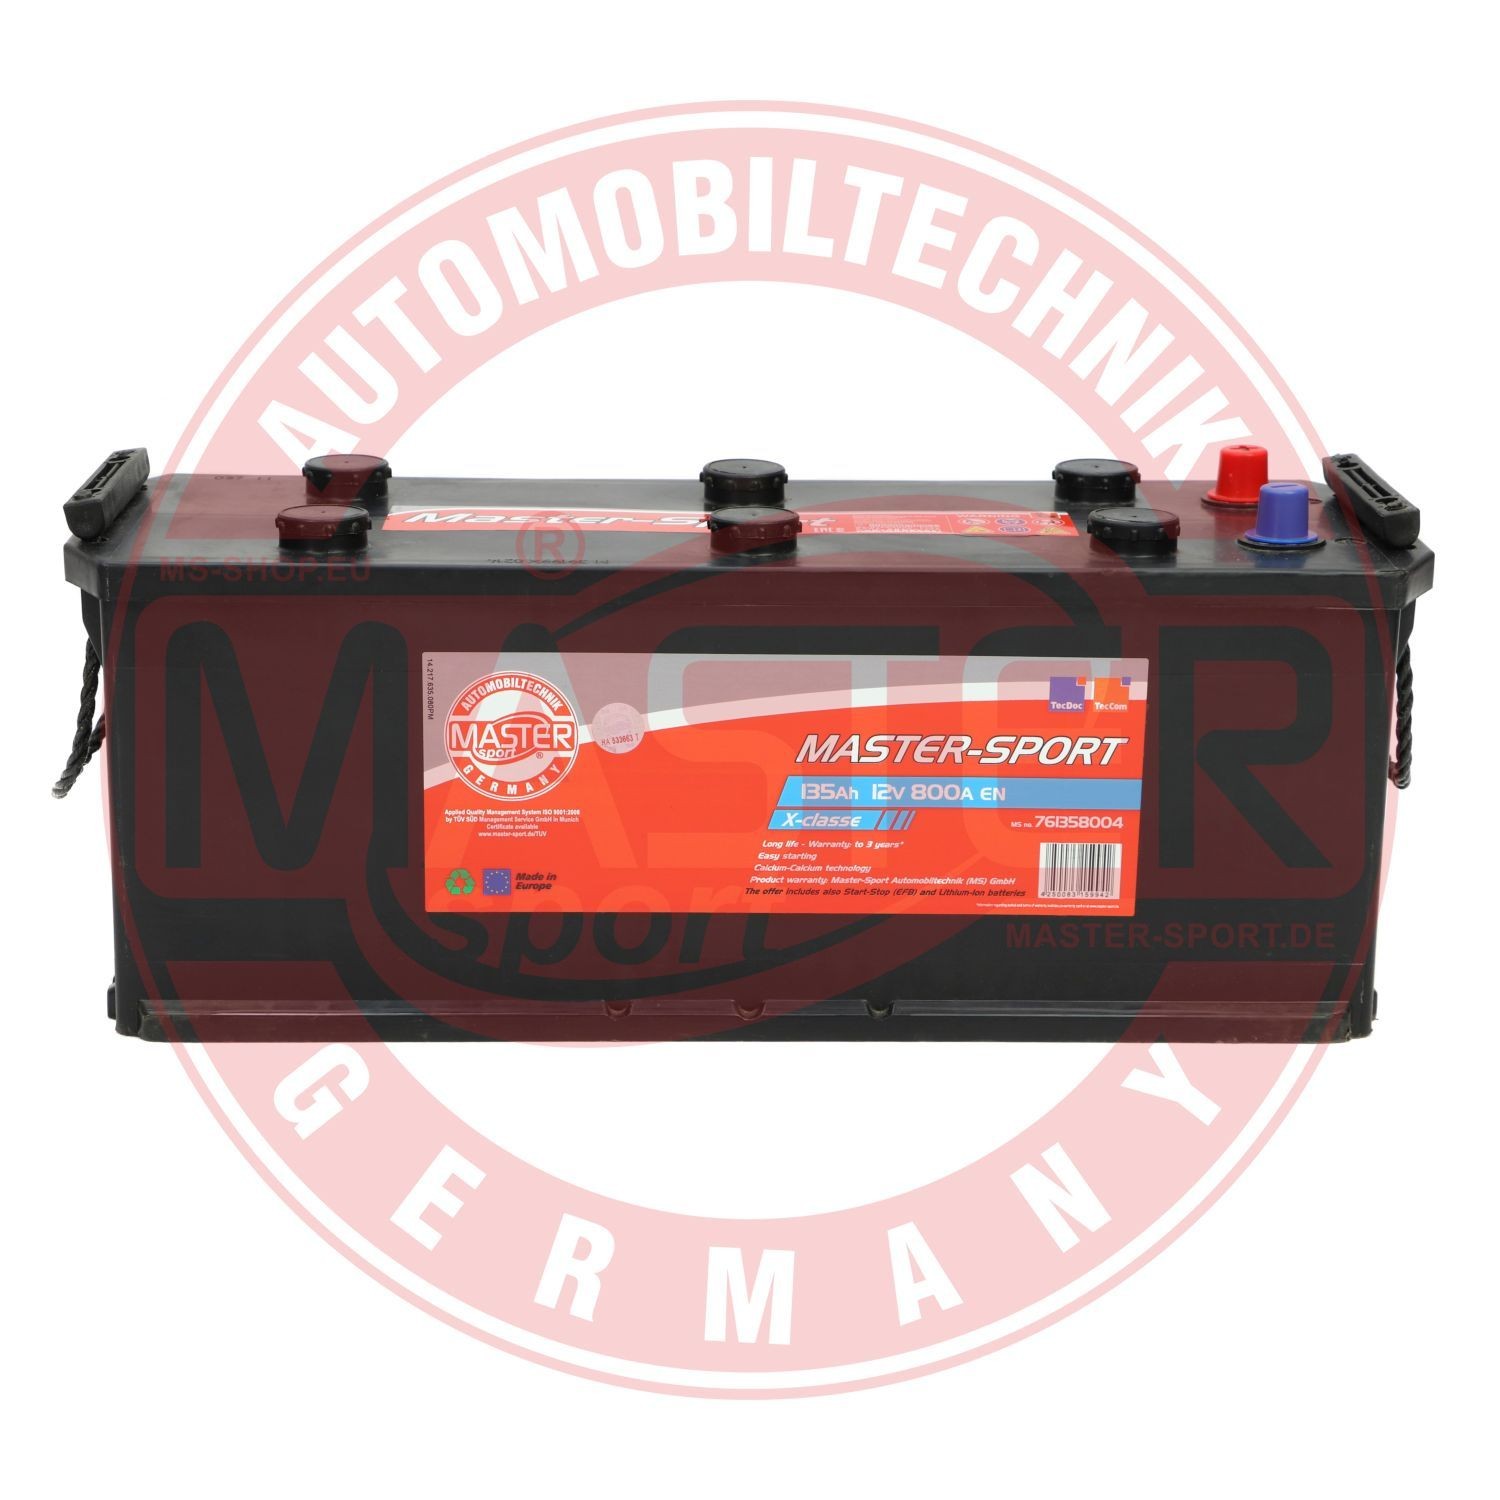 761358004 MASTER-SPORT Batterie MERCEDES-BENZ UNIMOG